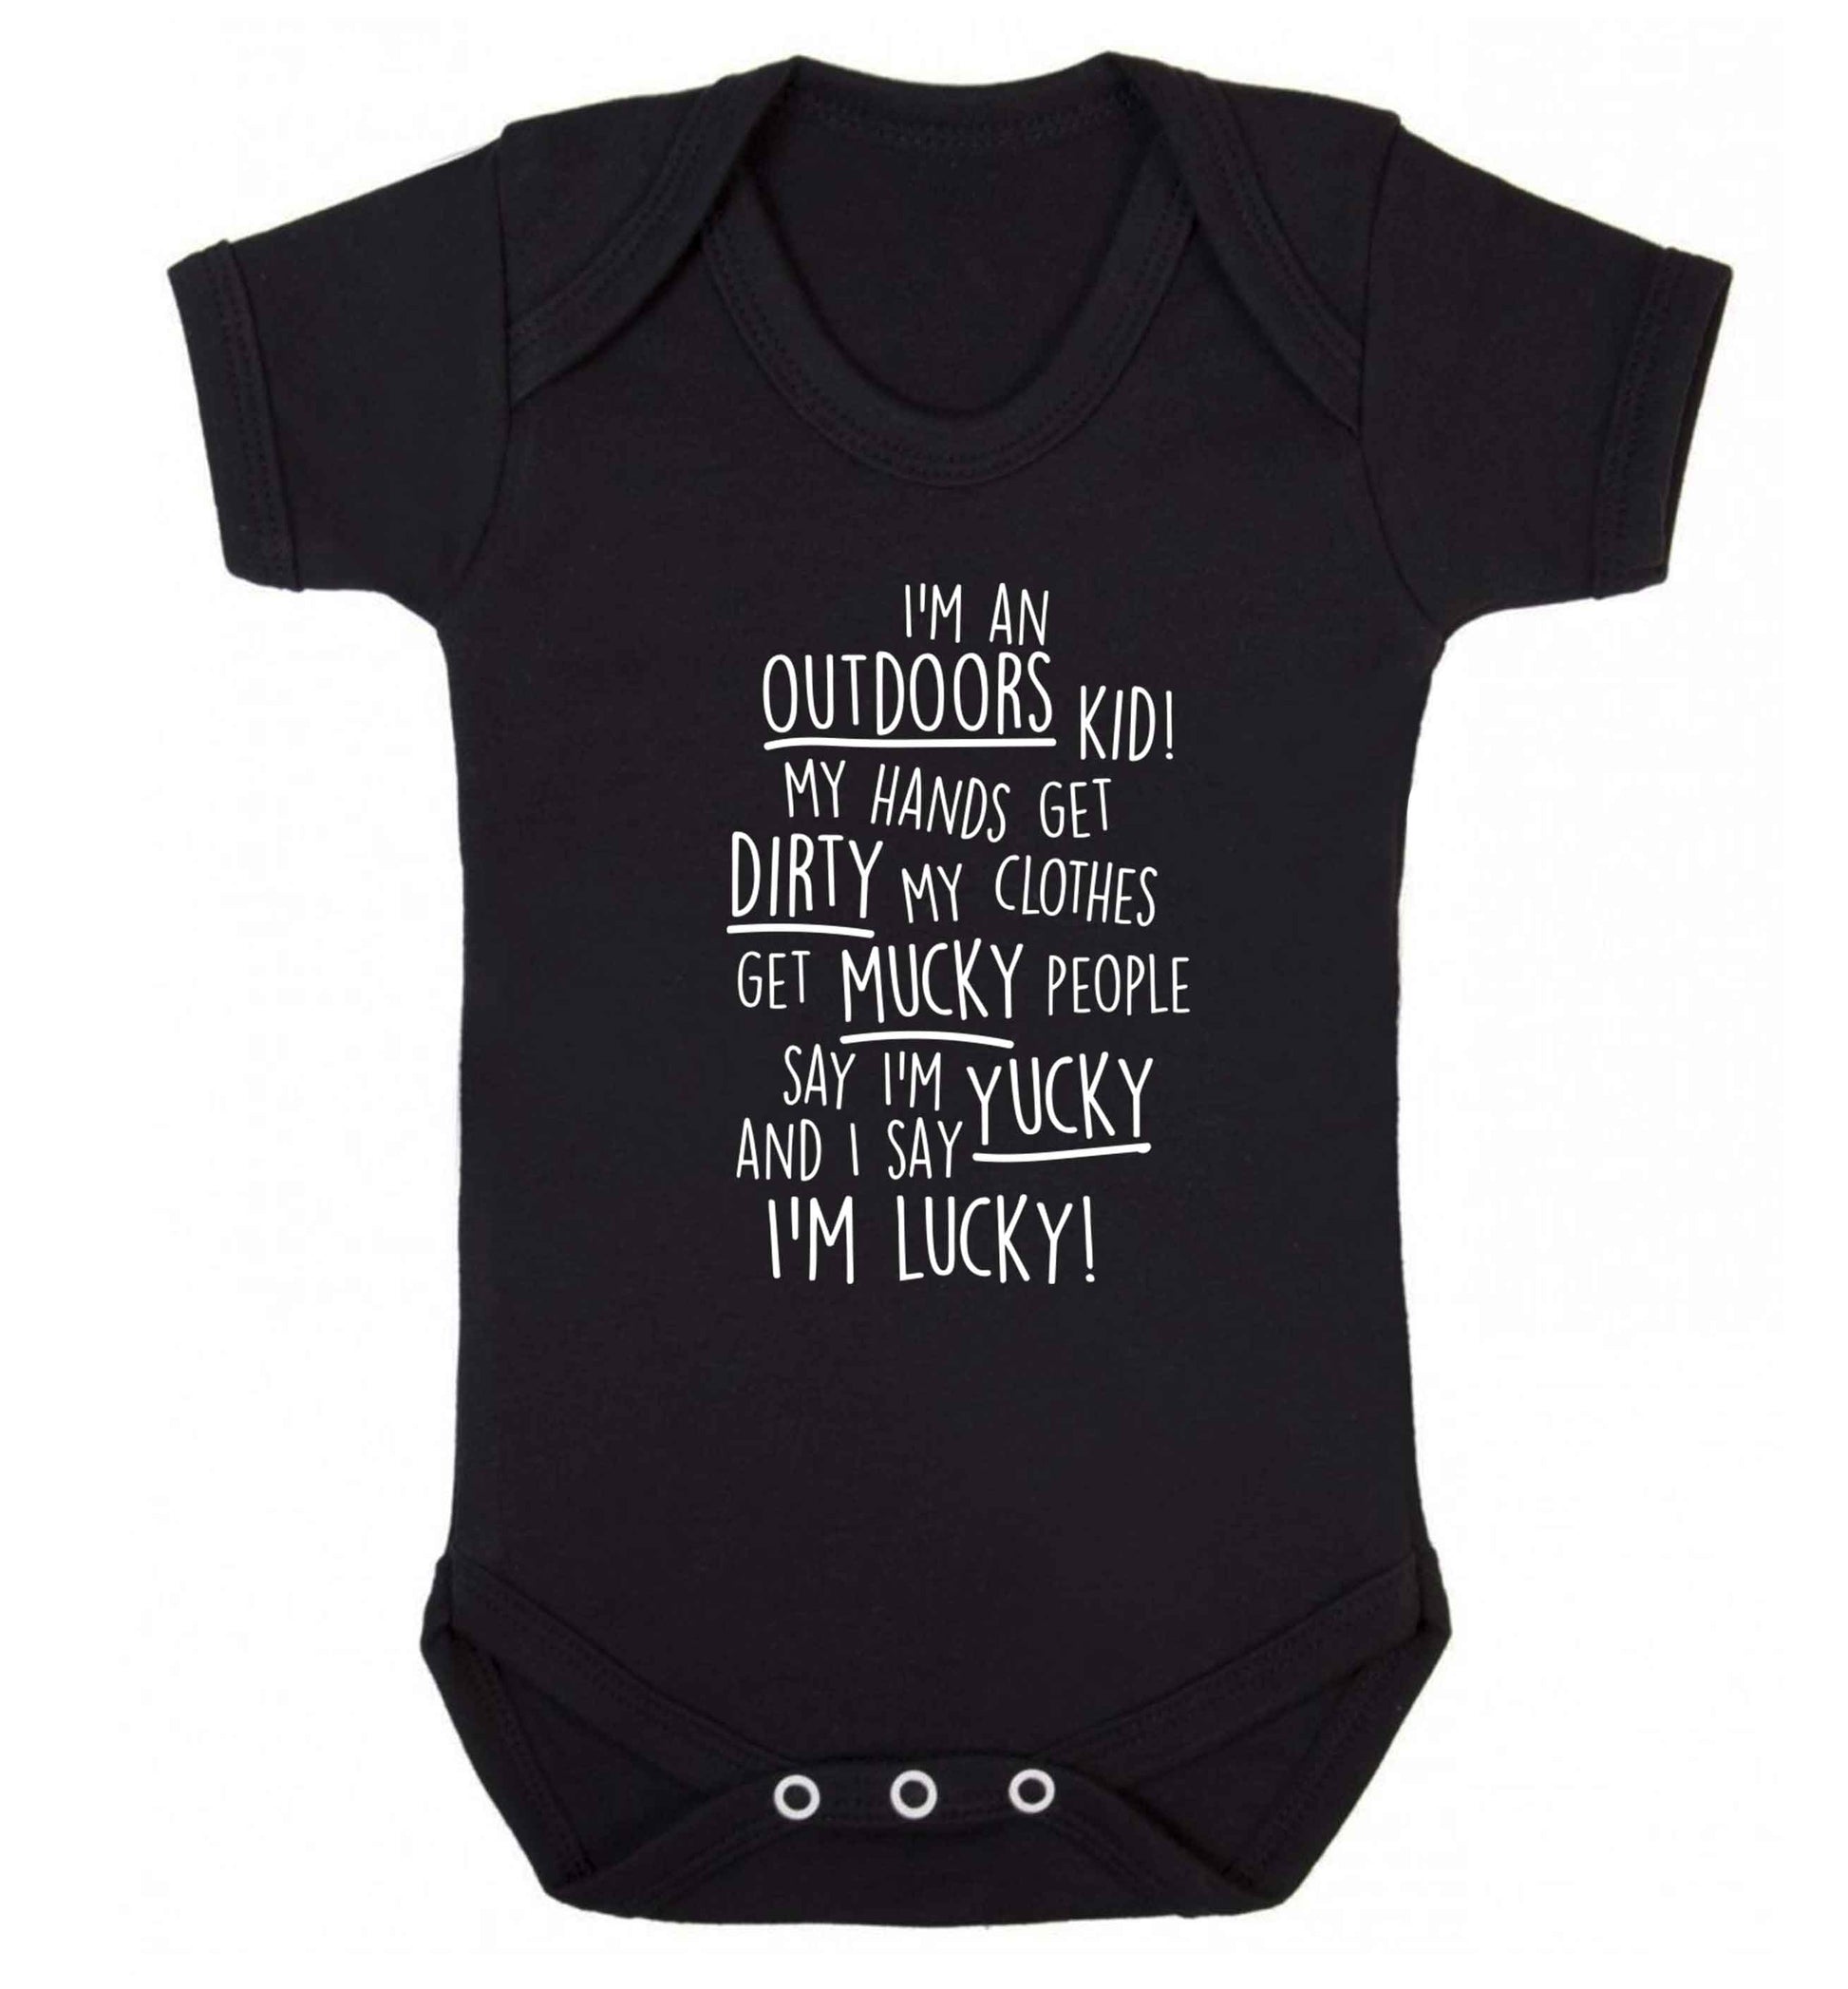 I'm an outdoors kid poem Baby Vest black 18-24 months